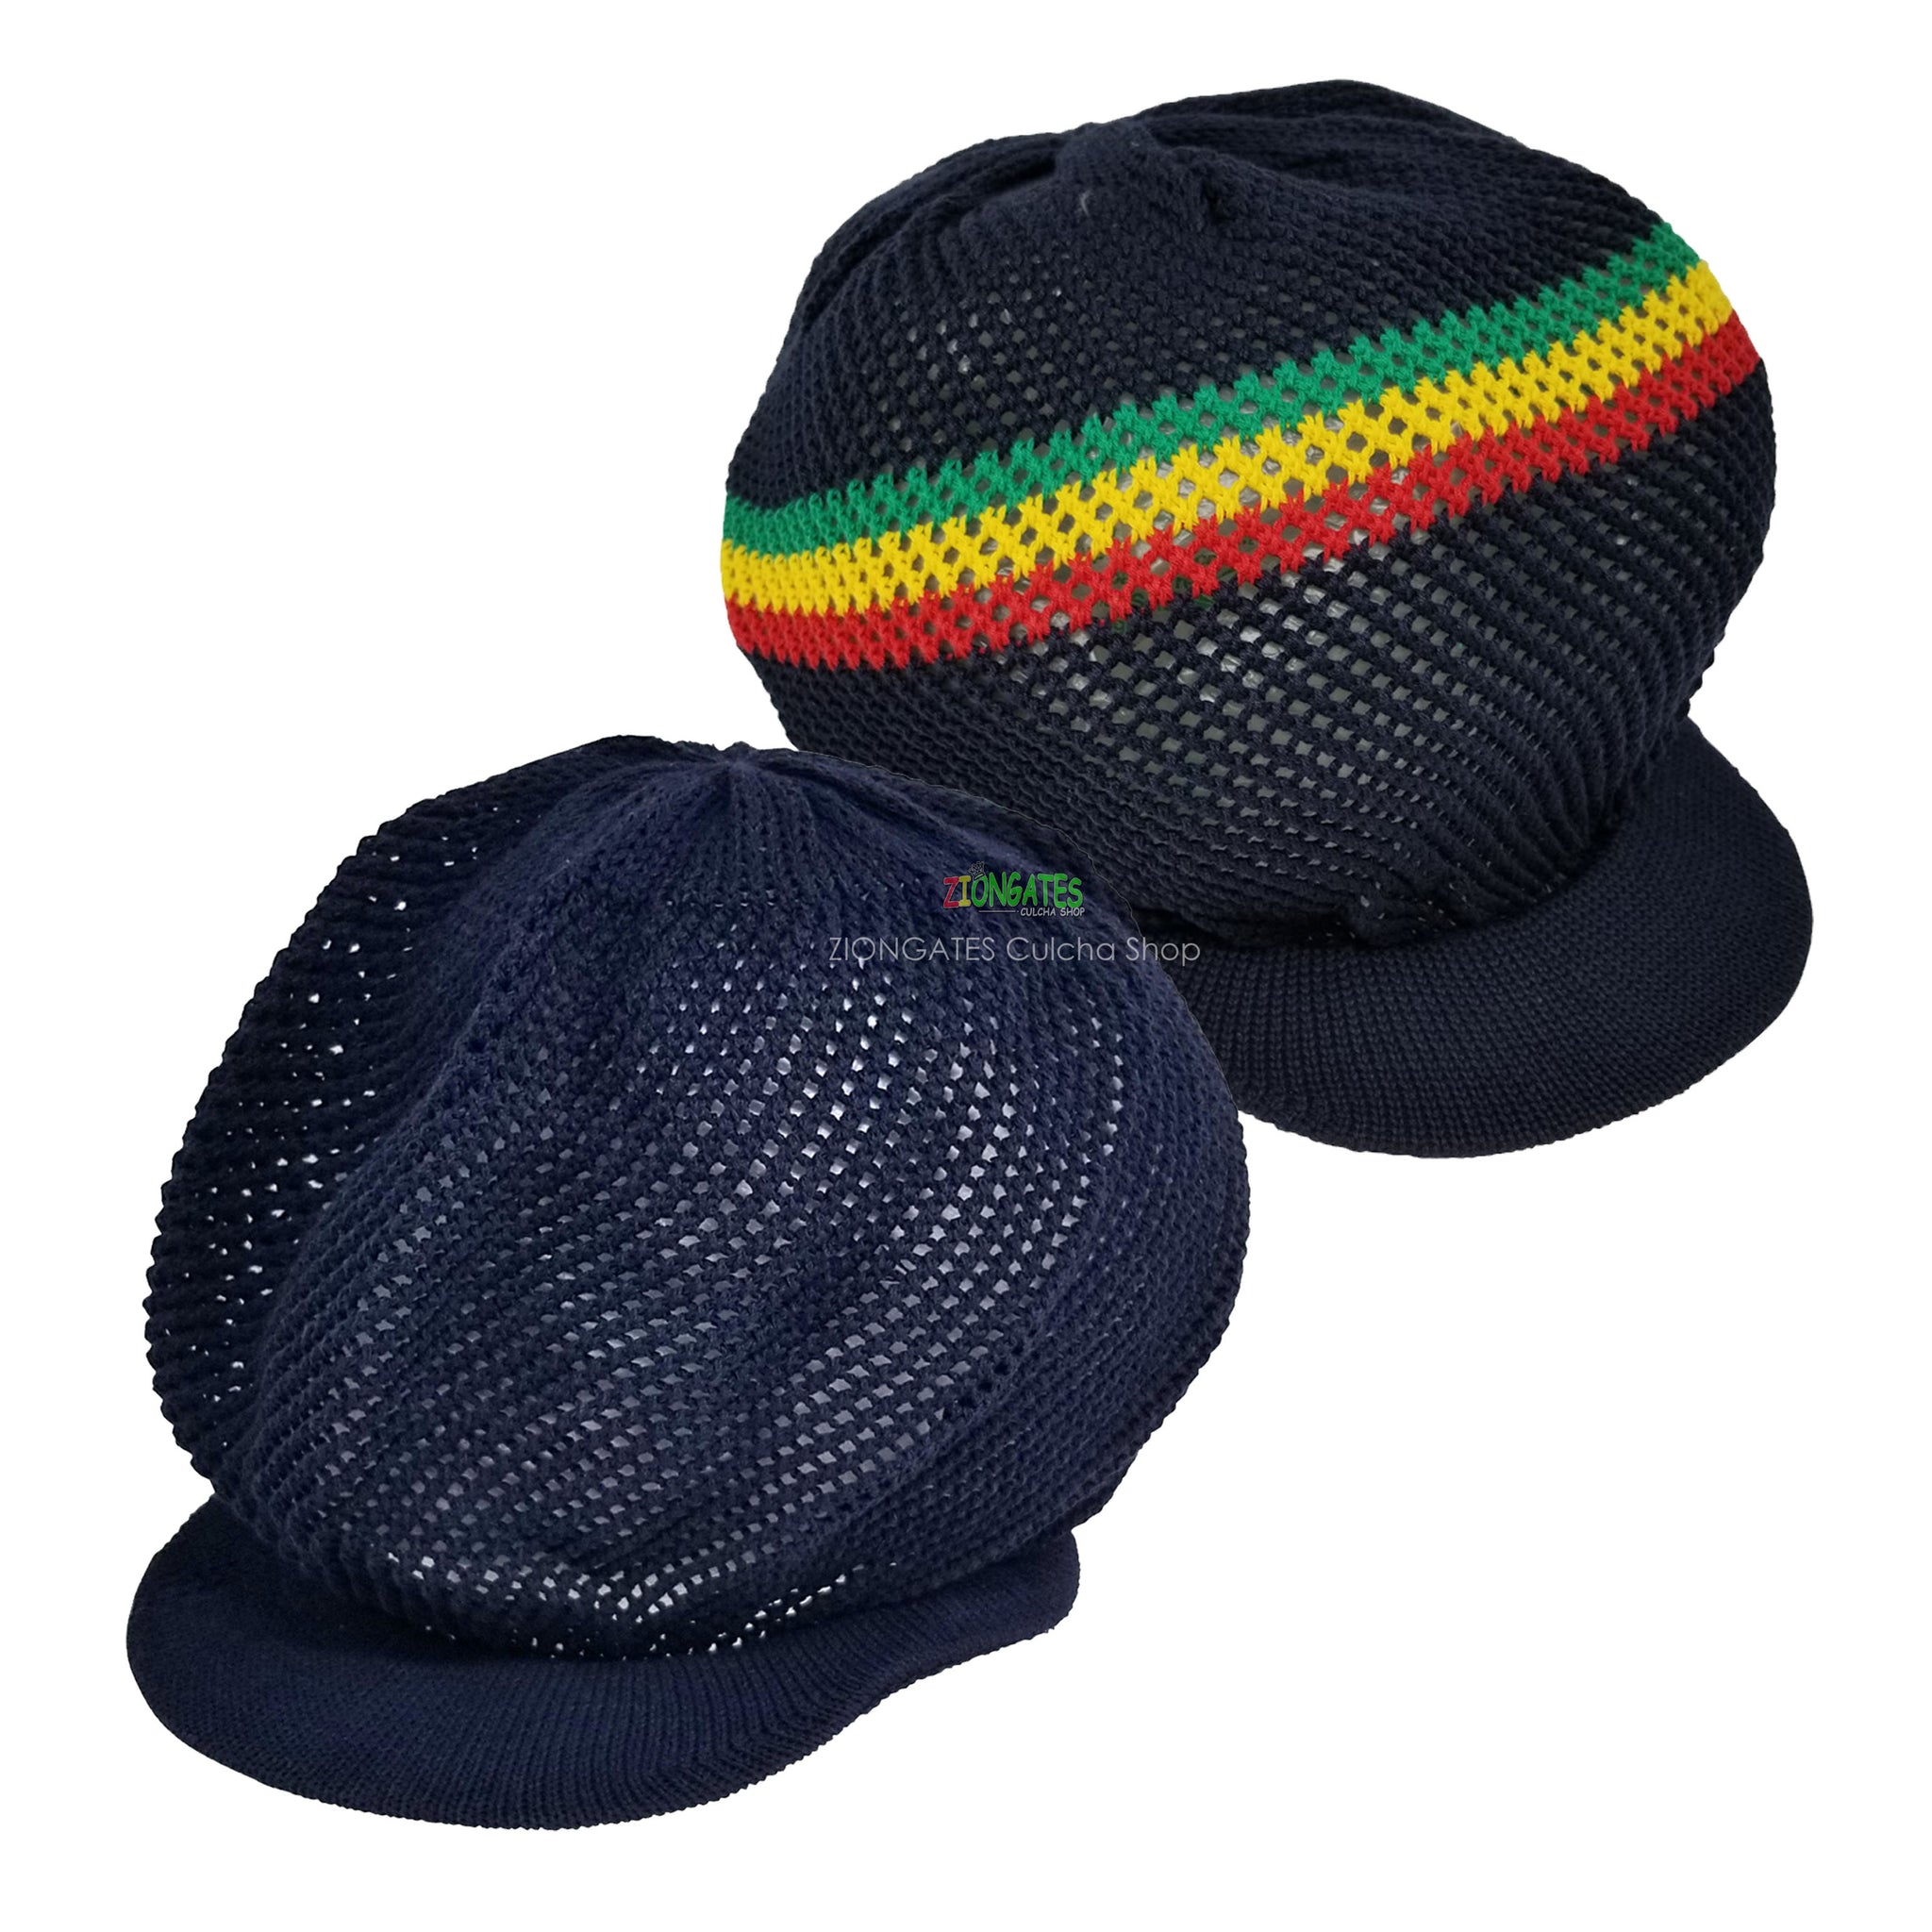 RH035-11 Medium Blue MESH crown Rastafarian Crown AKA rasta hats tams dread locks cap with red yellow green stripes